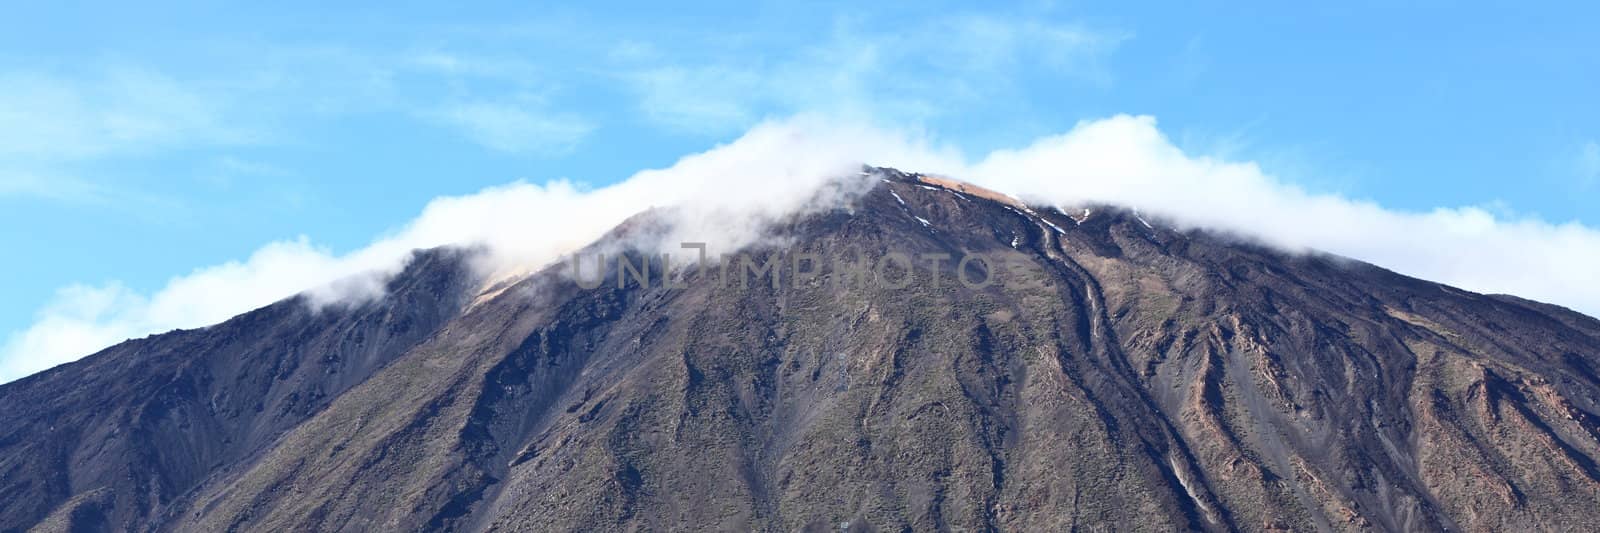 mountain top panorama. Peak of volcano Teide on Tenerife, Canary Islands, Spain.